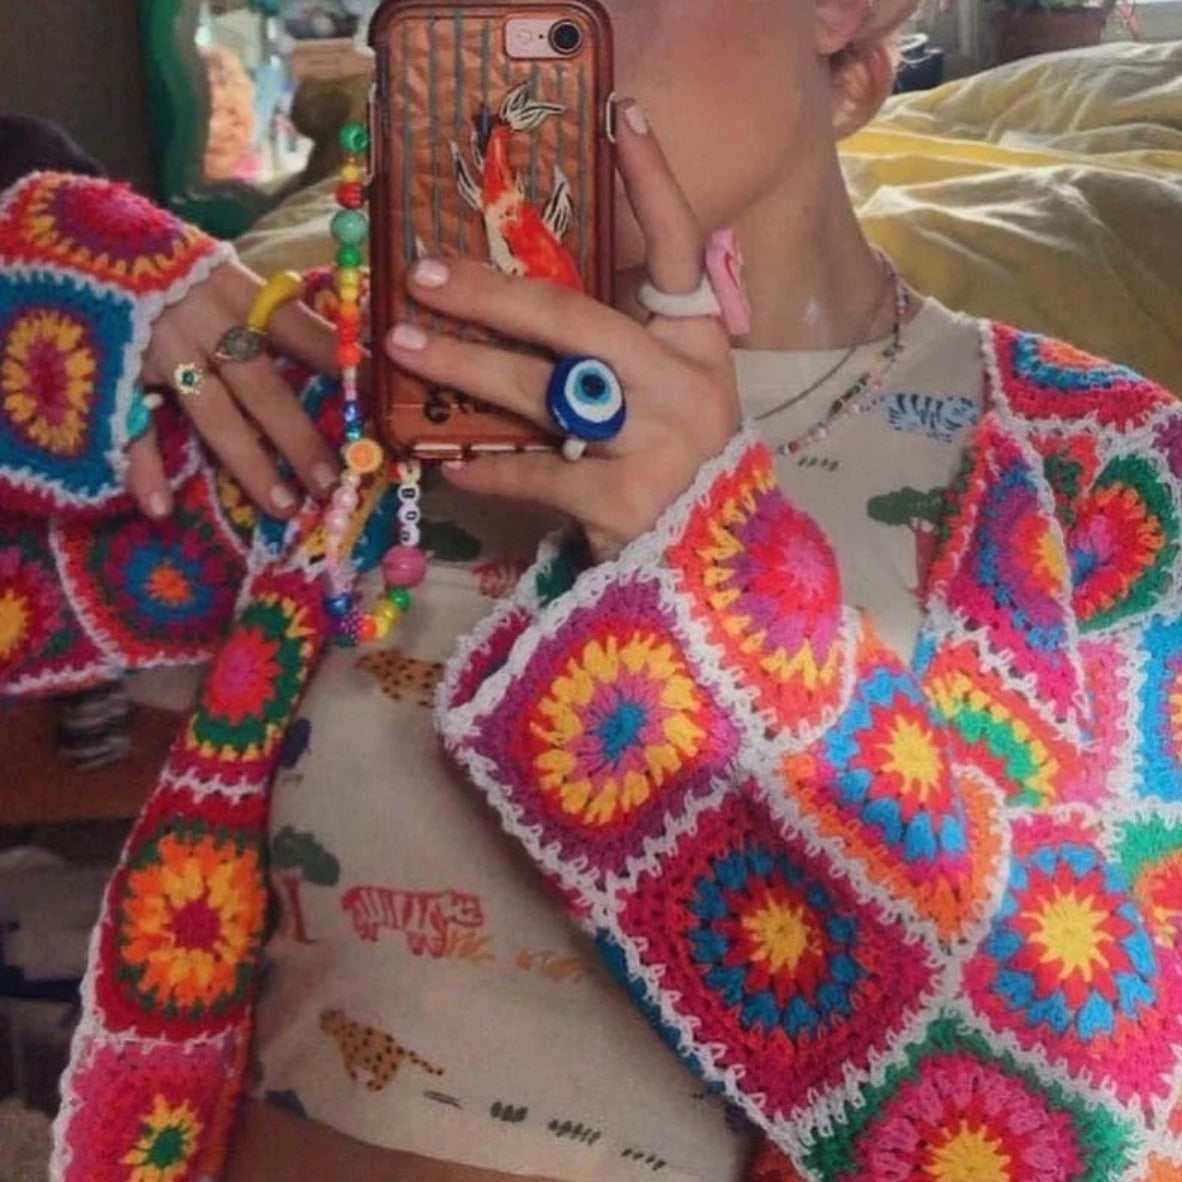 Sunburst Boho Coloured Hand Crochet Cardigan